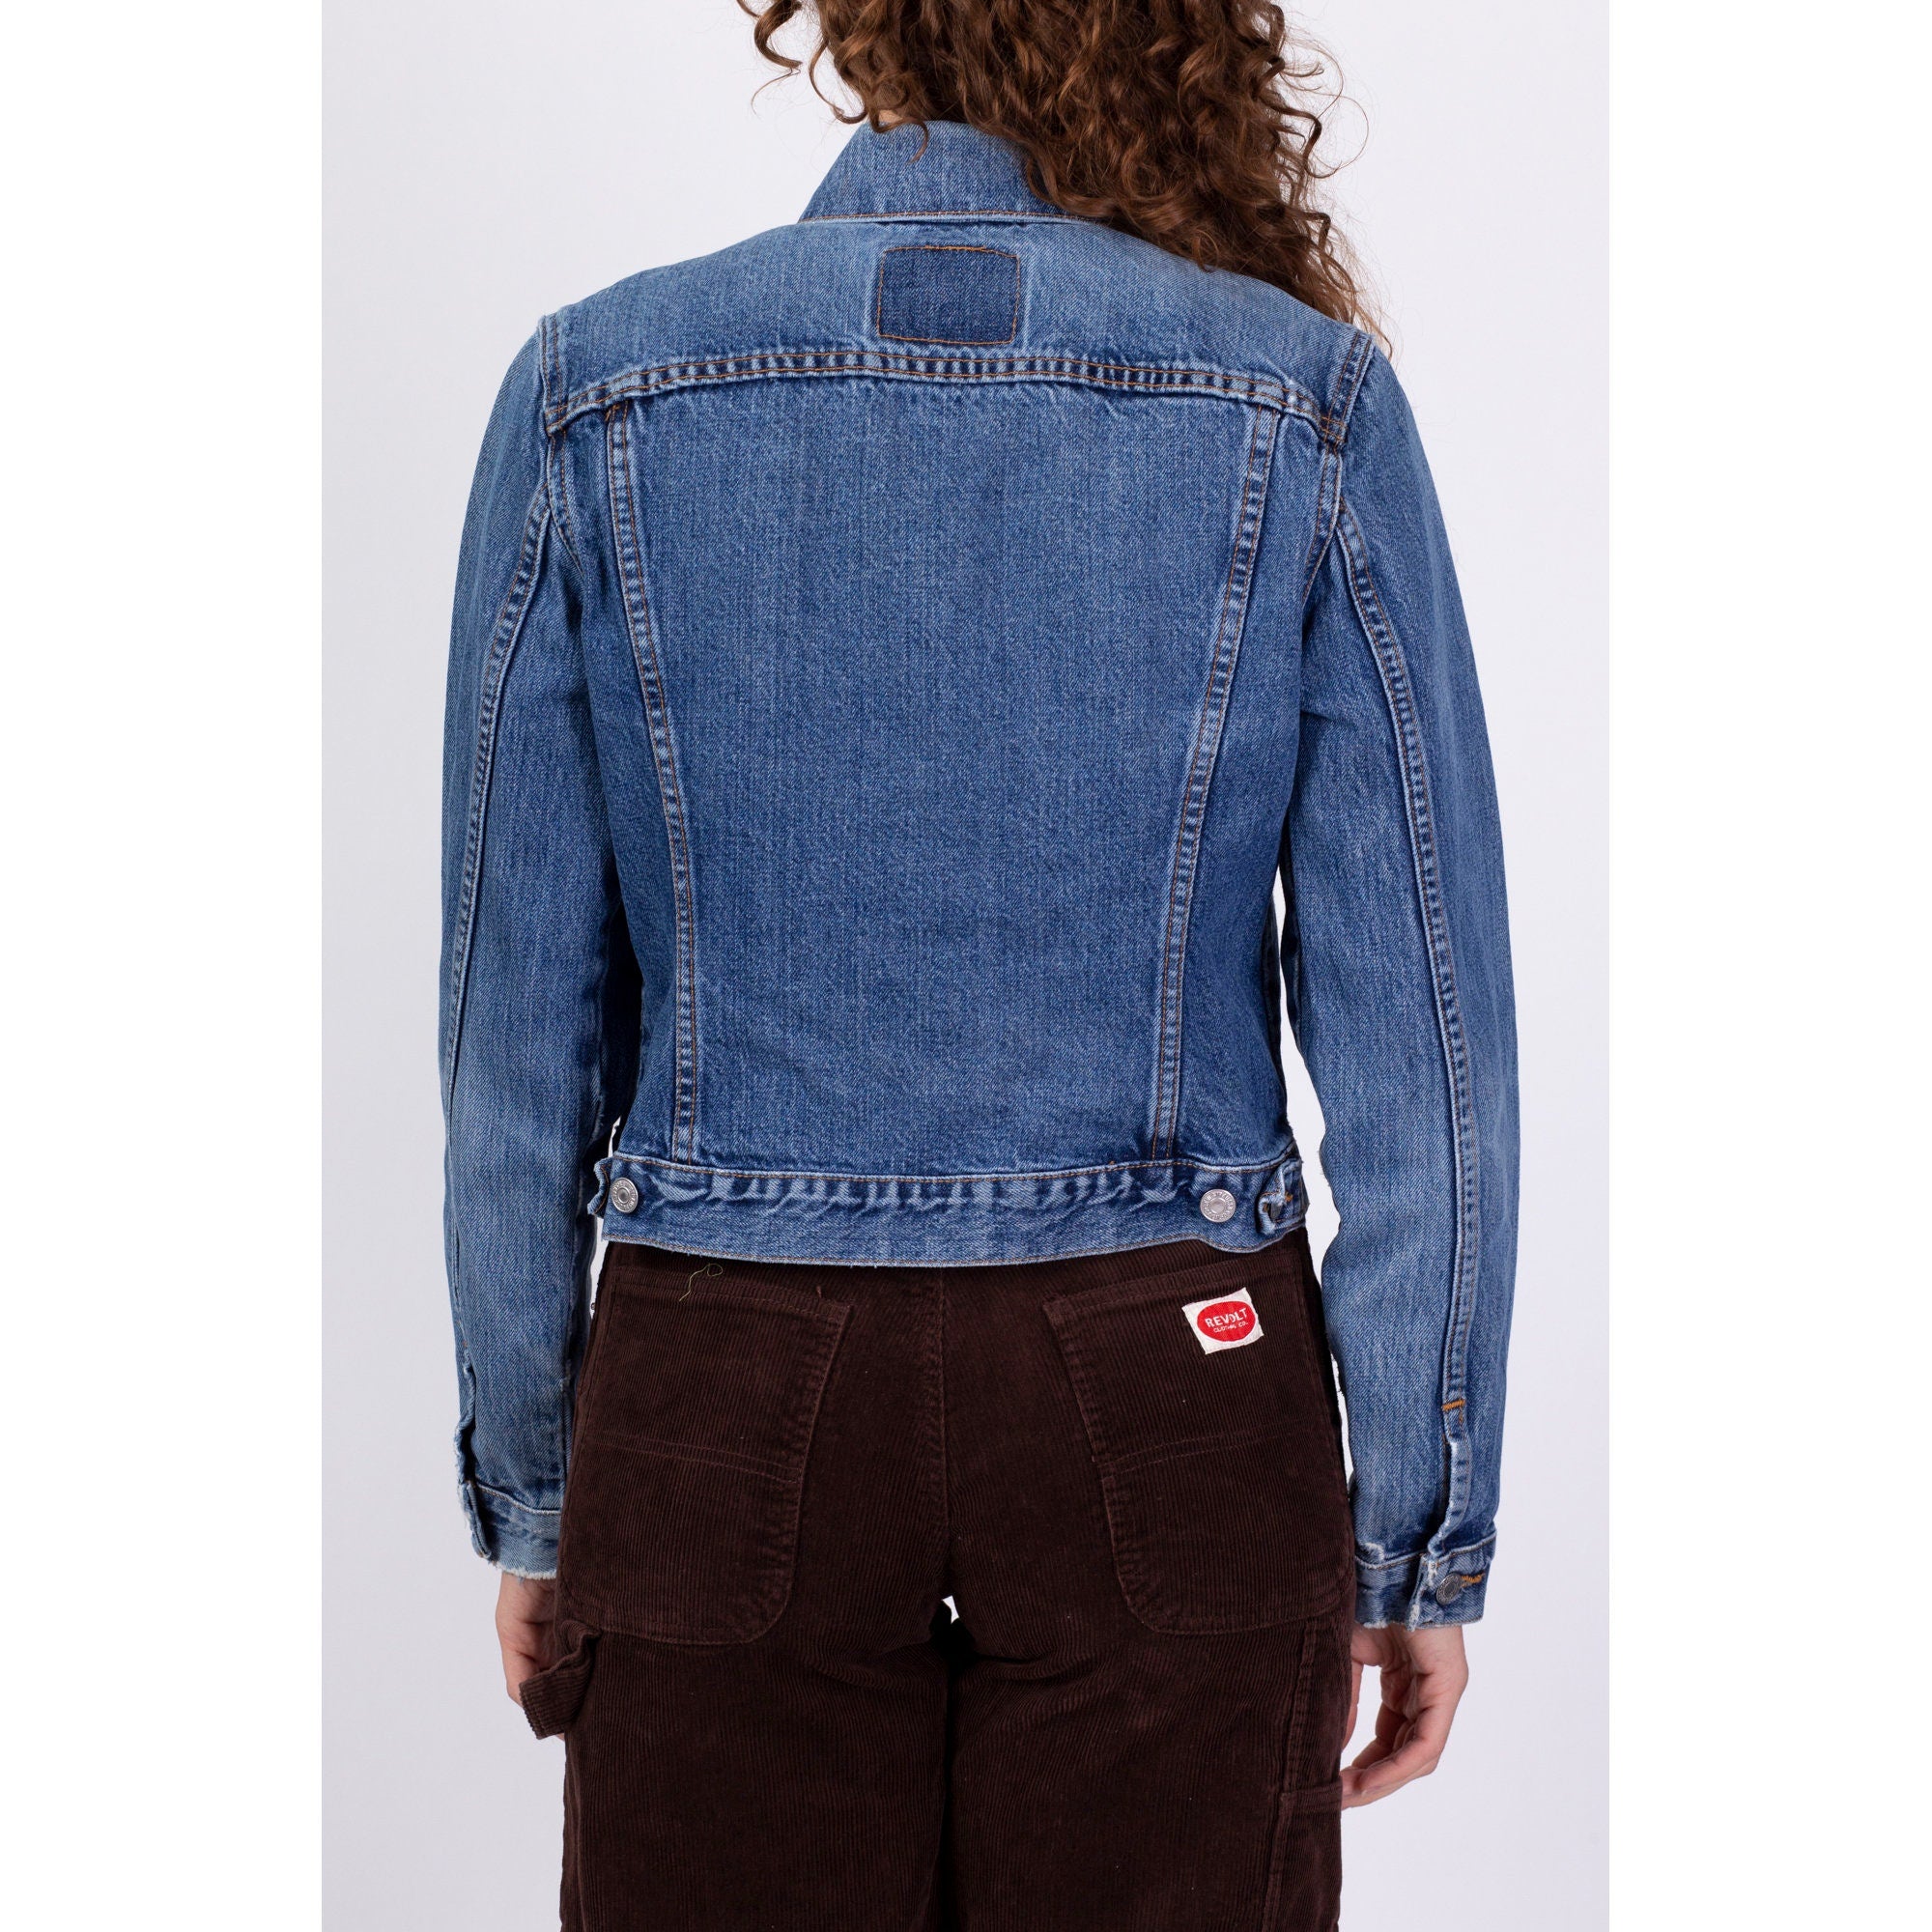 Vintage 70s Levis Denim Jacket - Men's XS Short, Women's Small 